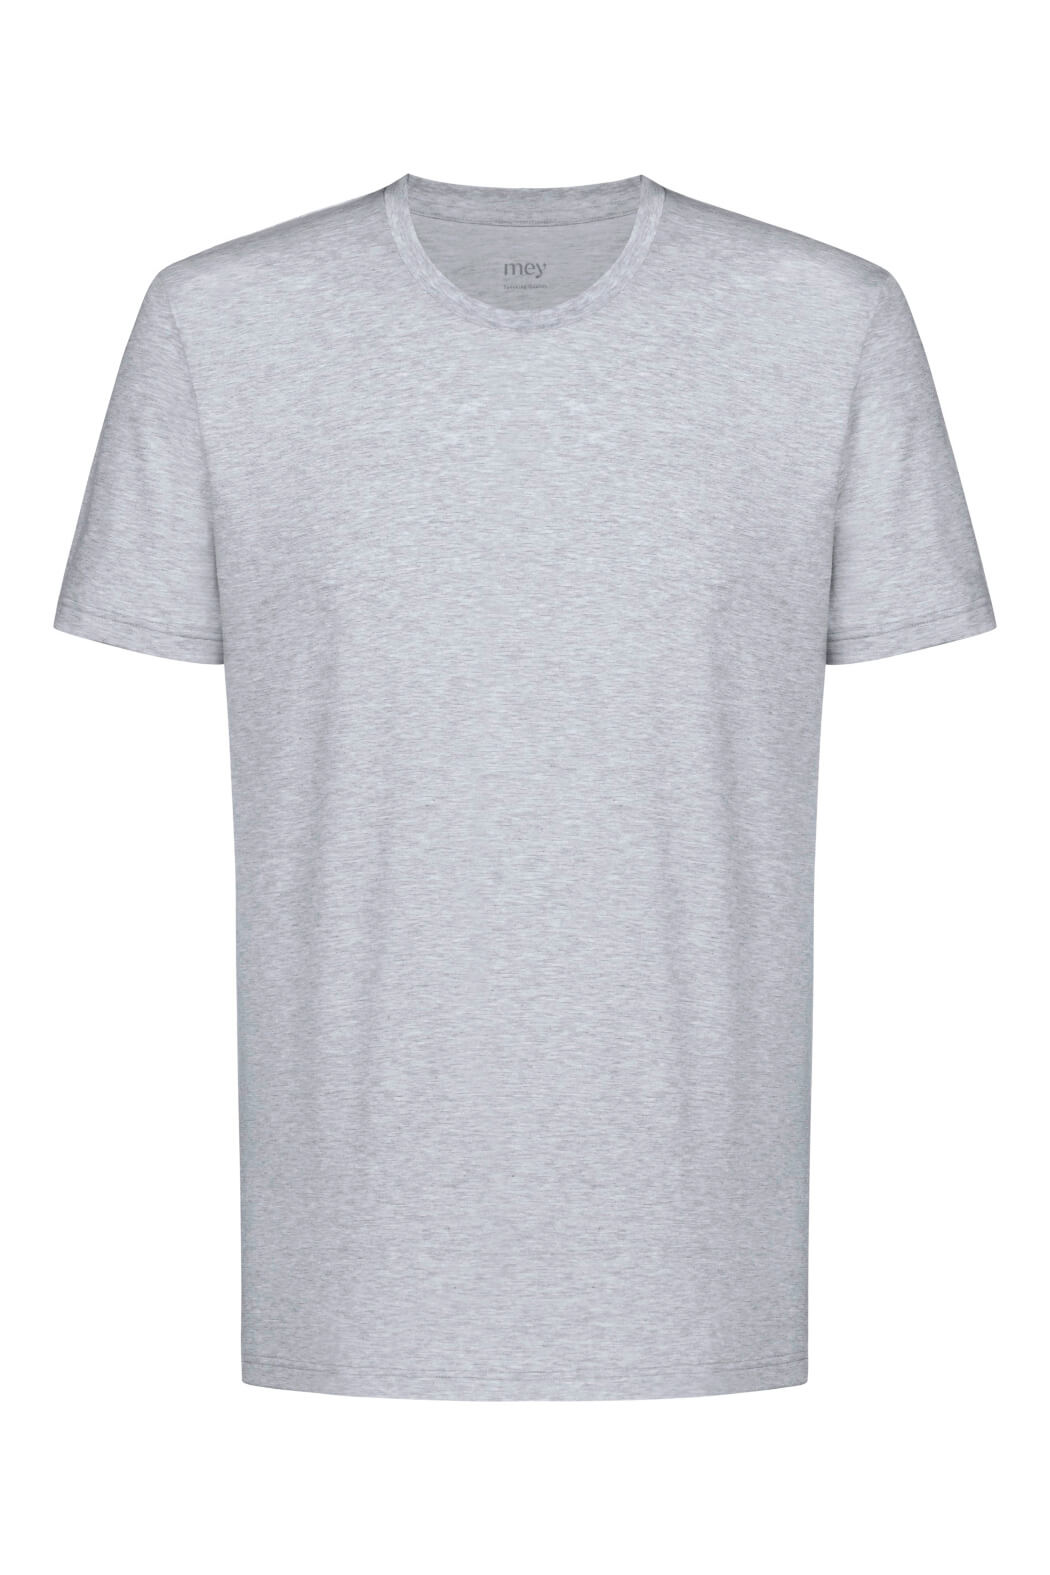 Mey Serie Dry Cotton Colour Herren T-Shirt